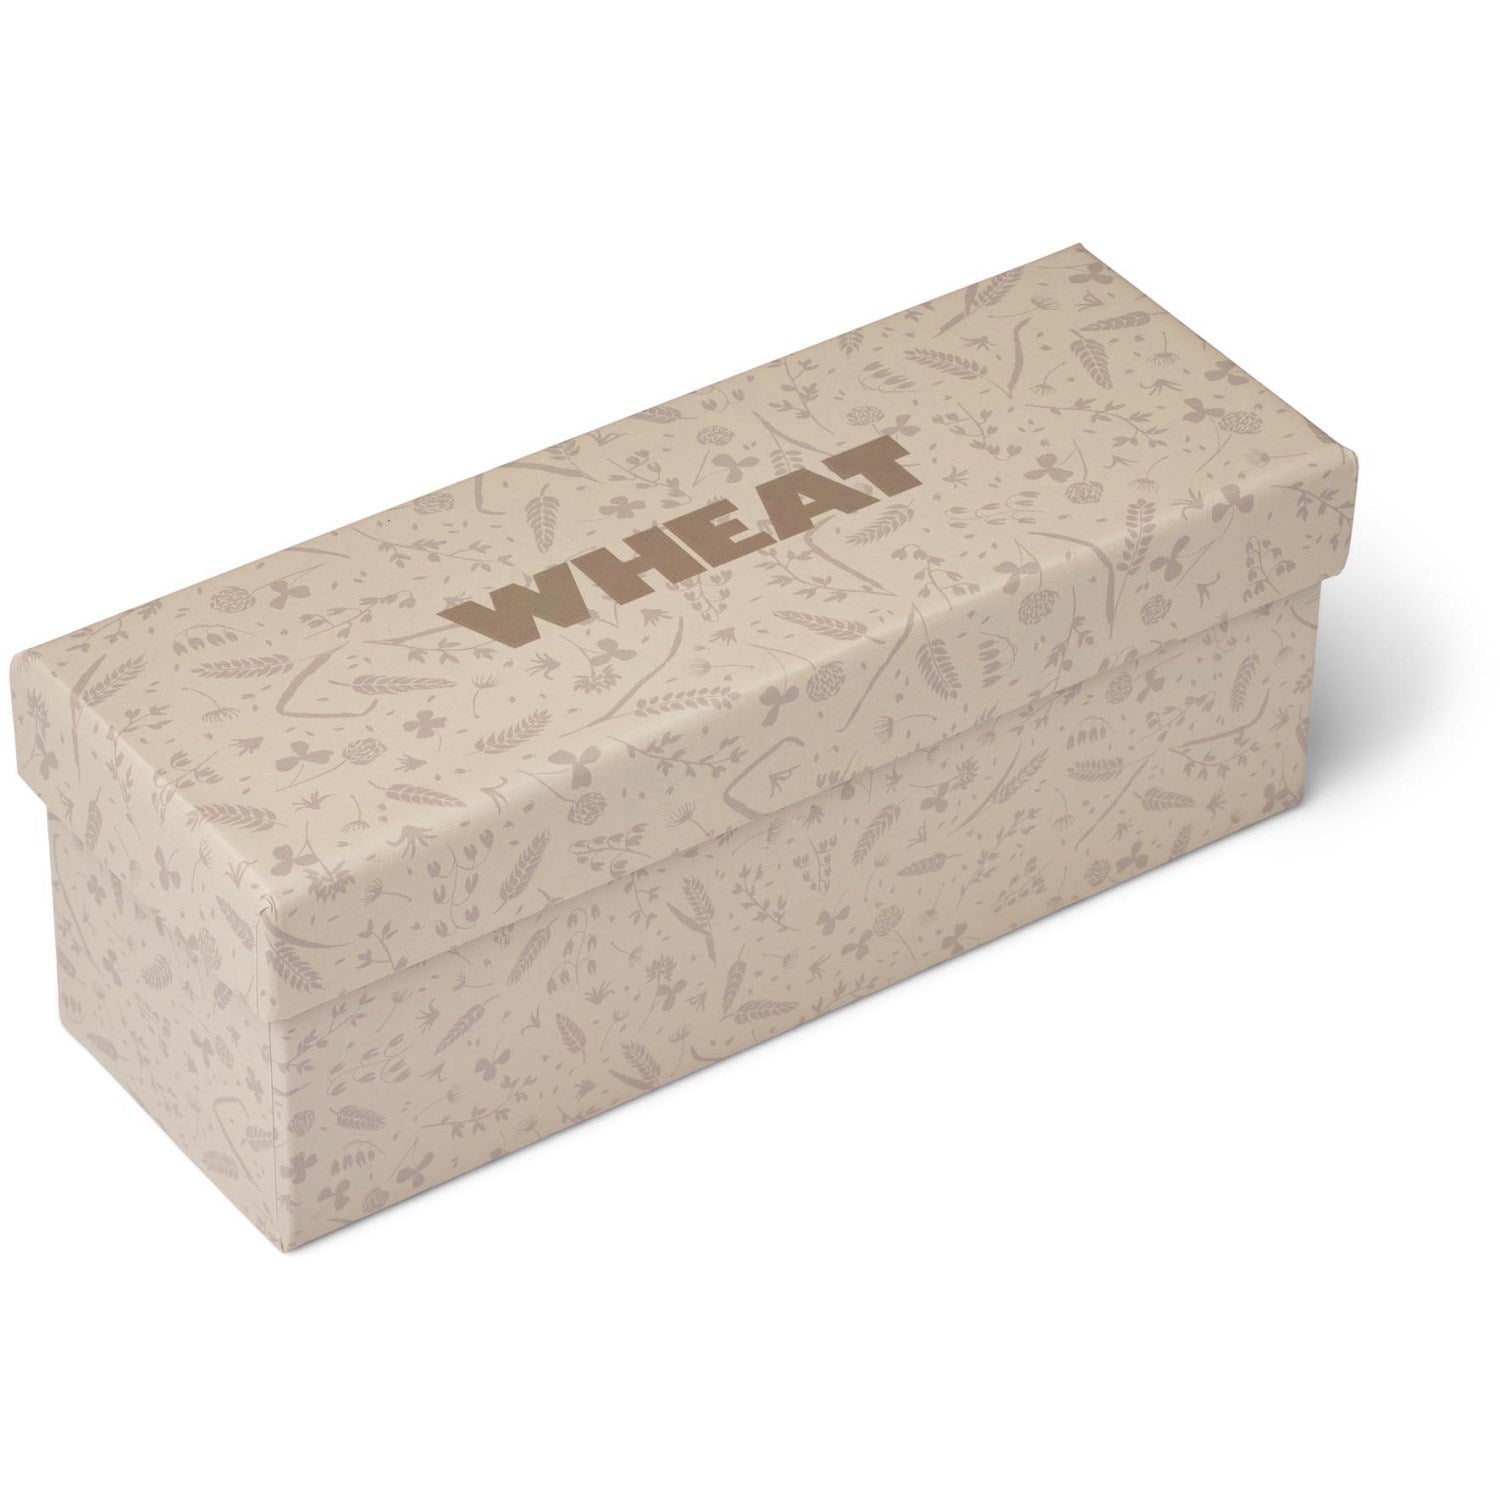 Wheat Rose Gift Box Evig Socks 4